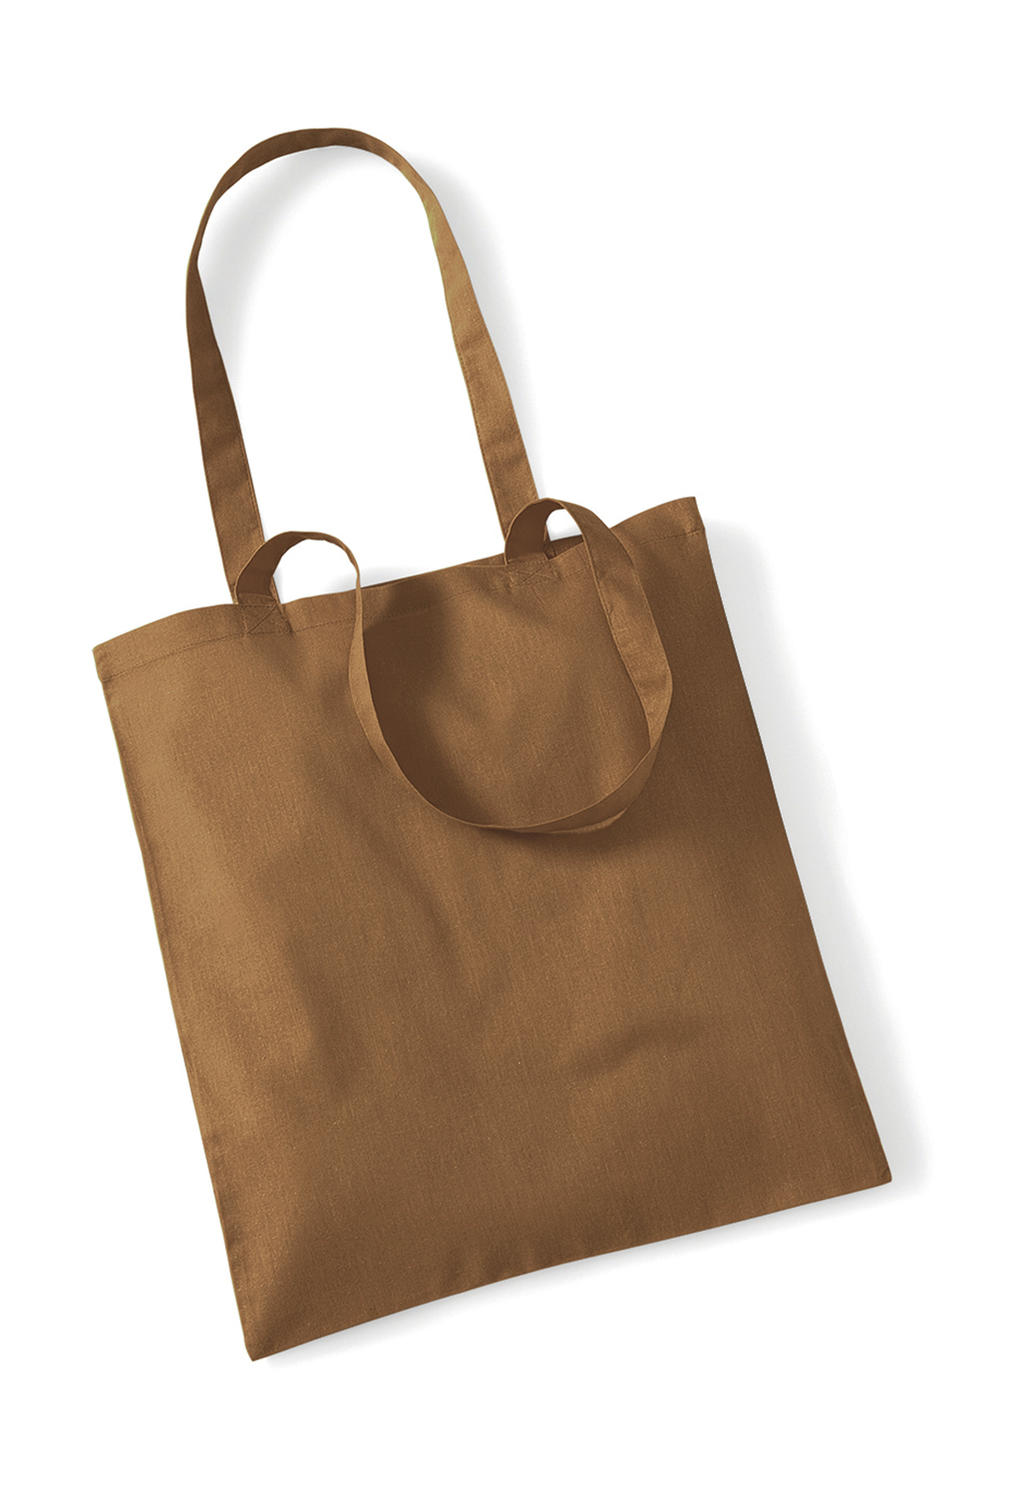  Bag for Life - Long Handles in Farbe Caramel